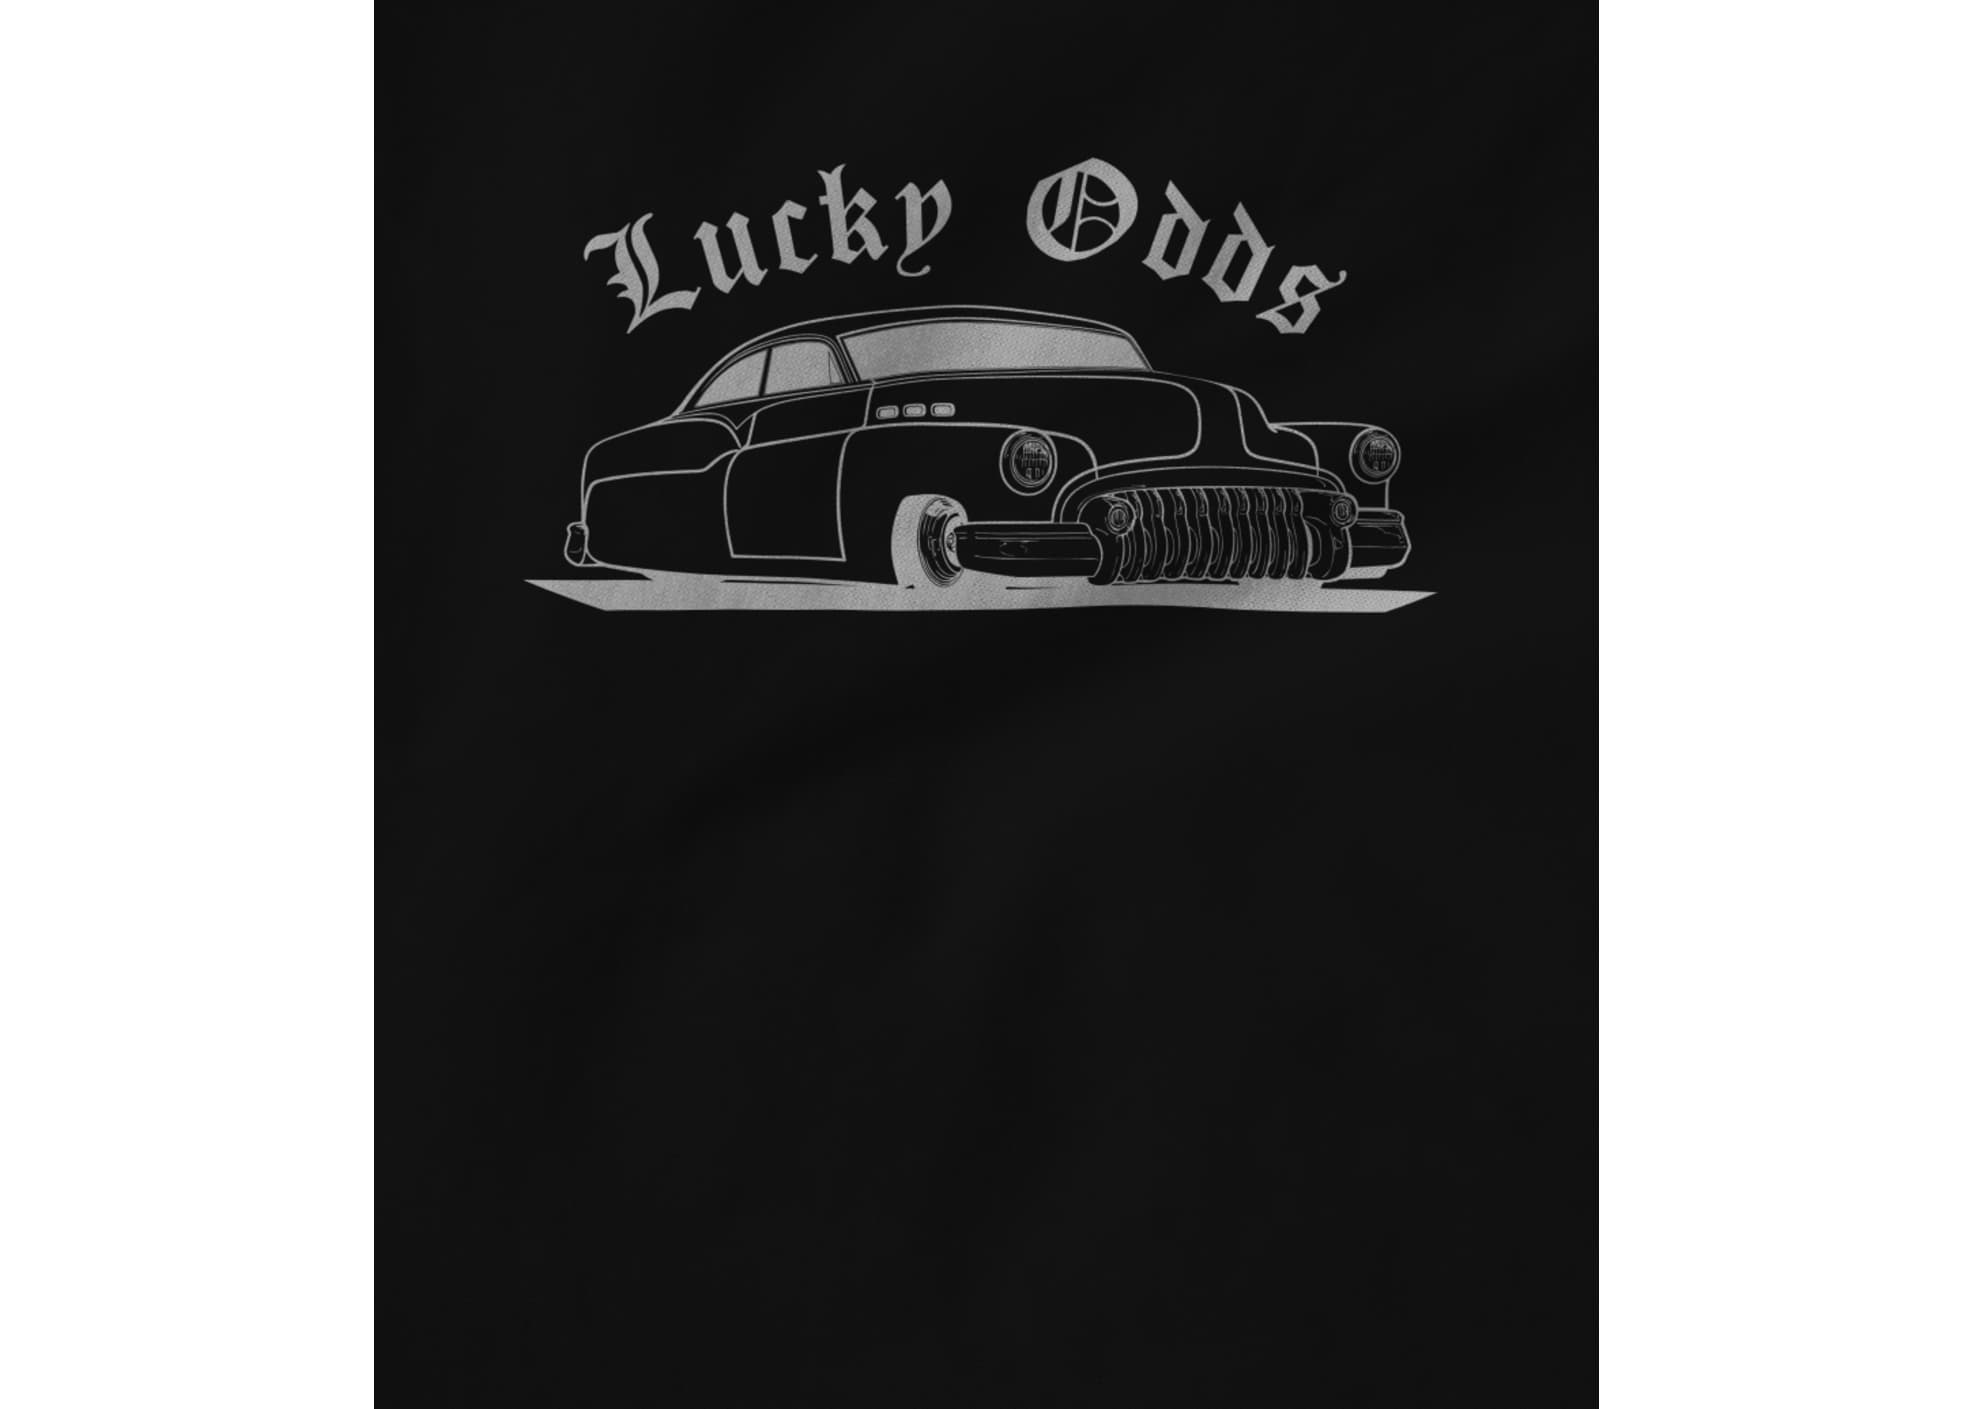 Lucky odds buick tee 1473536633